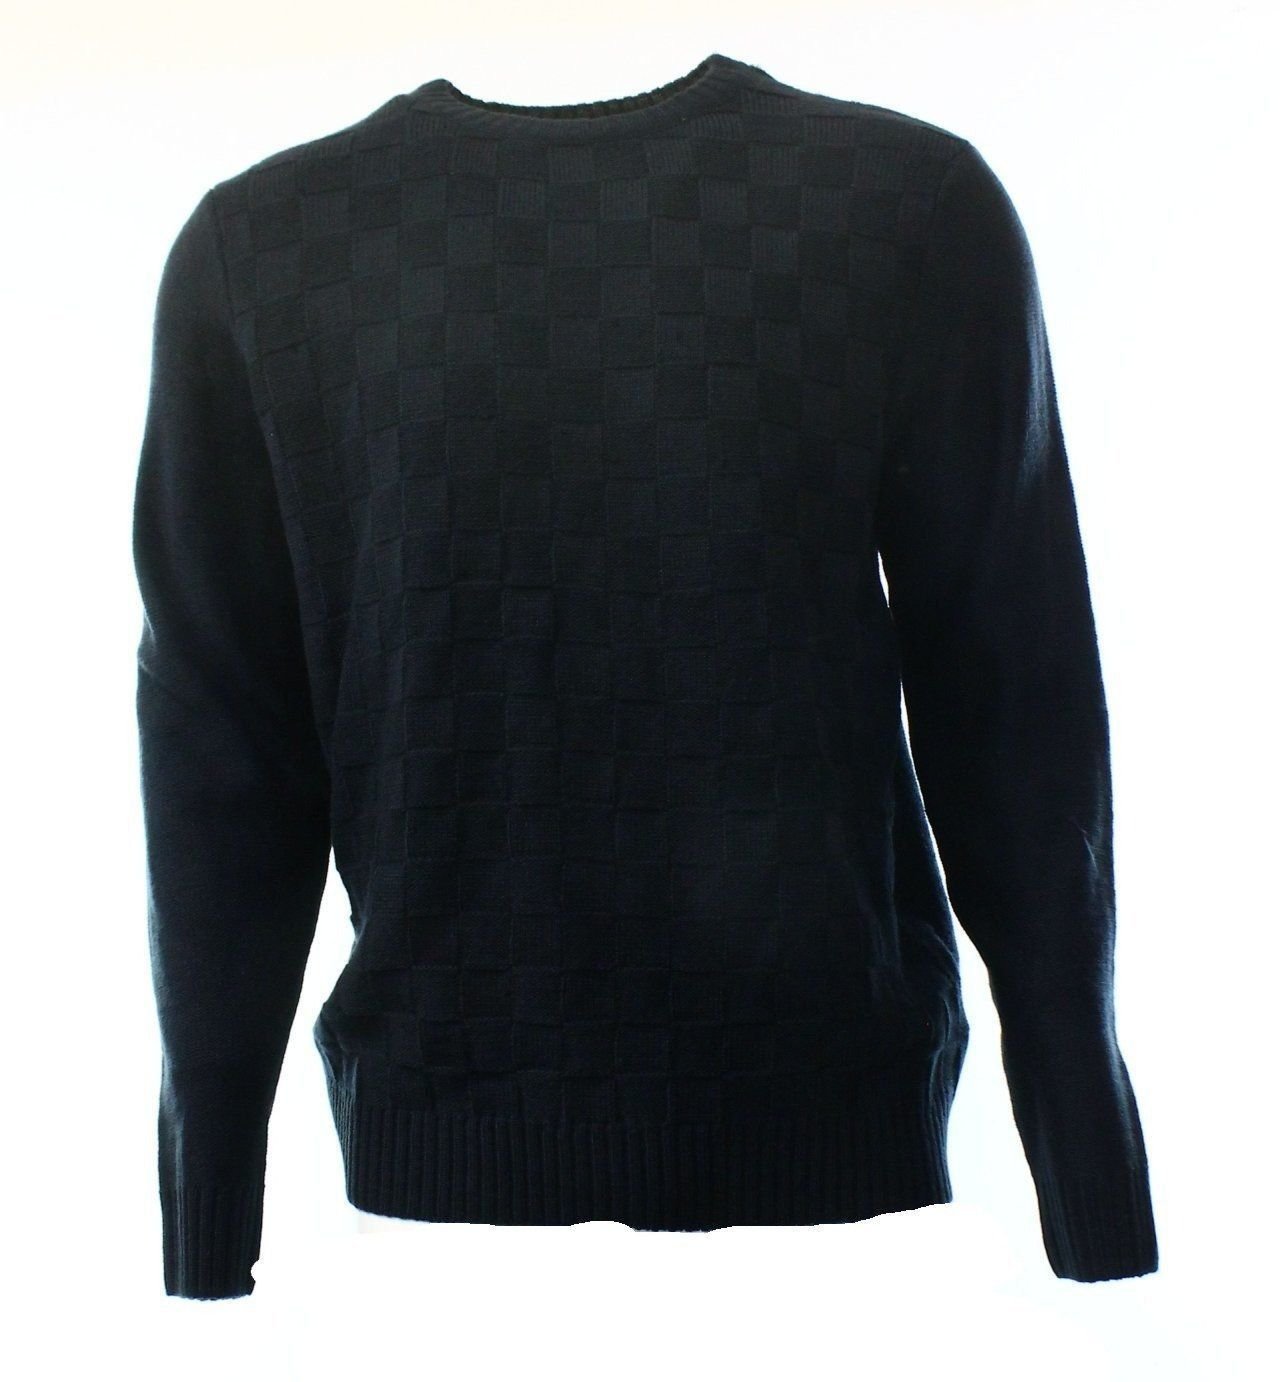 Geoffrey Beene Mens Sweater Deep Black Basketweave Crewneck Knit Pullover